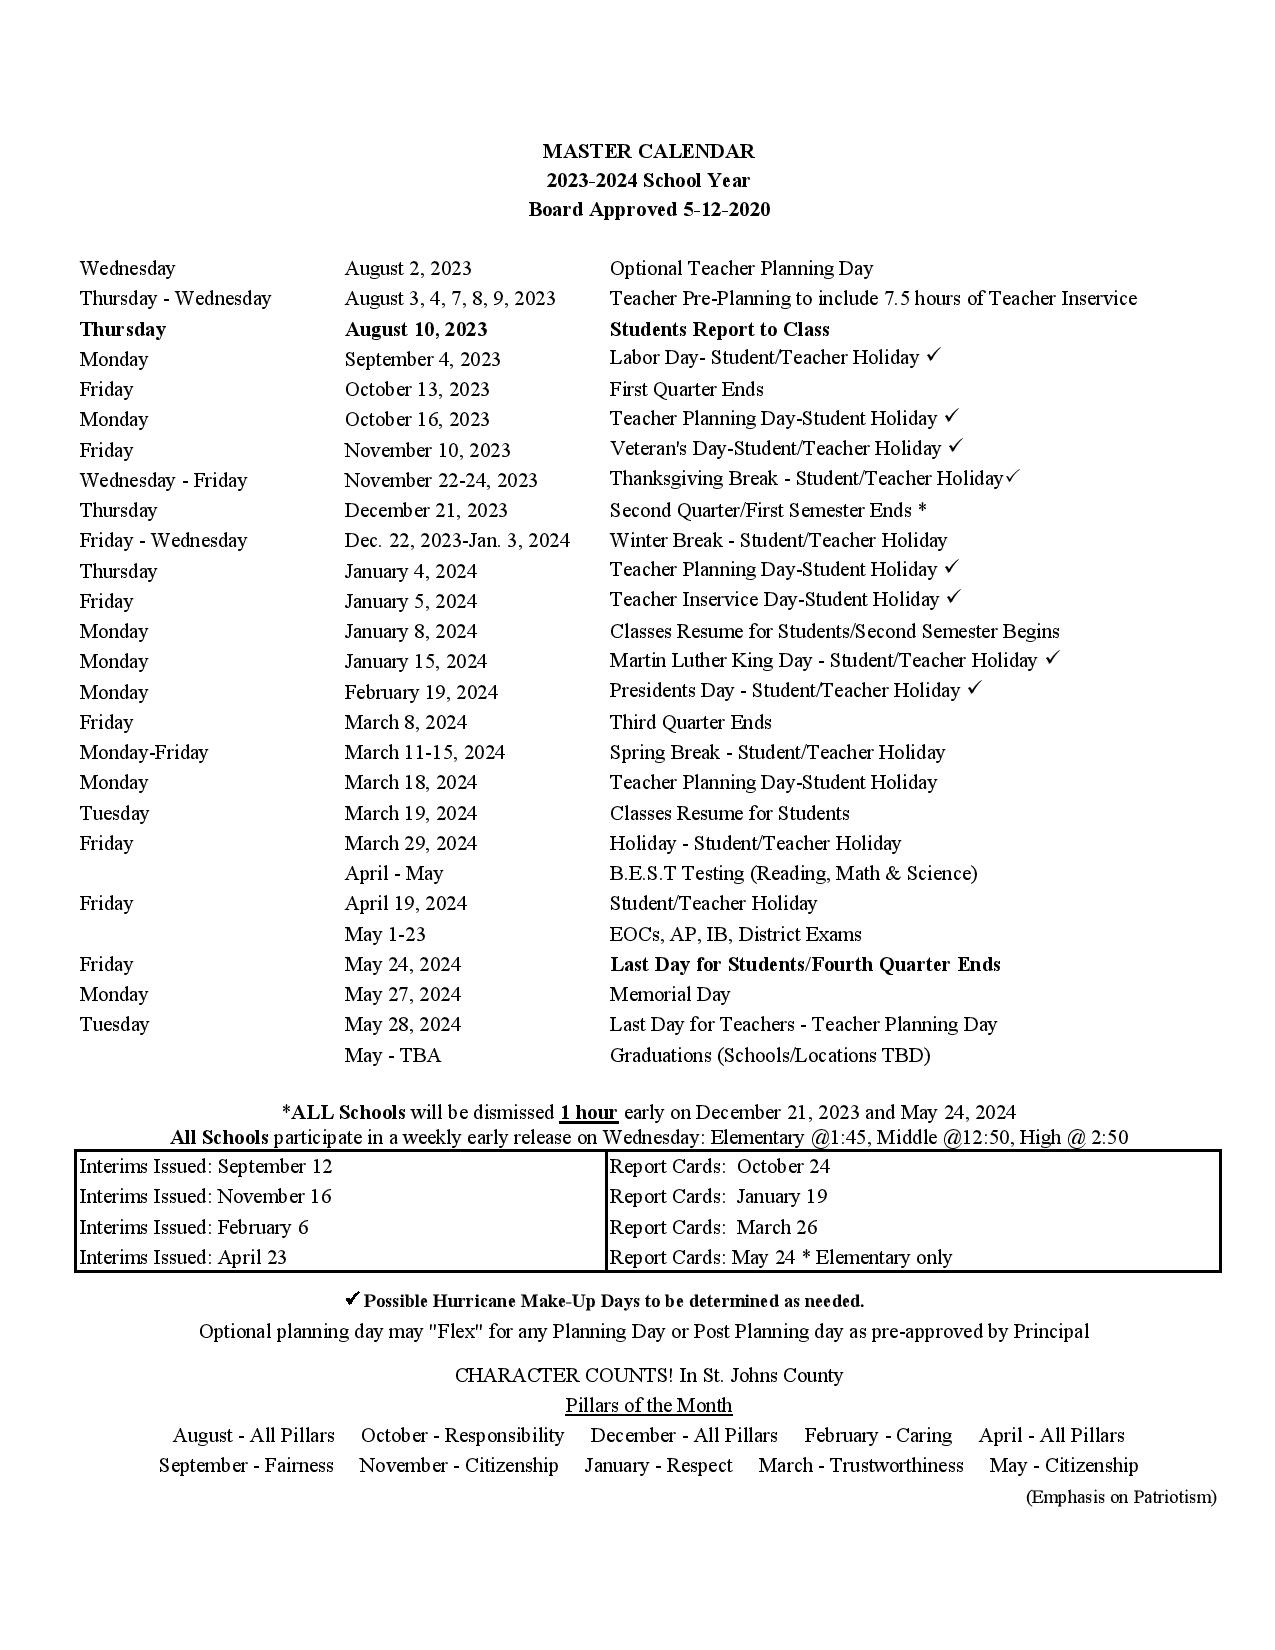 st-johns-county-school-district-calendar-2023-2024